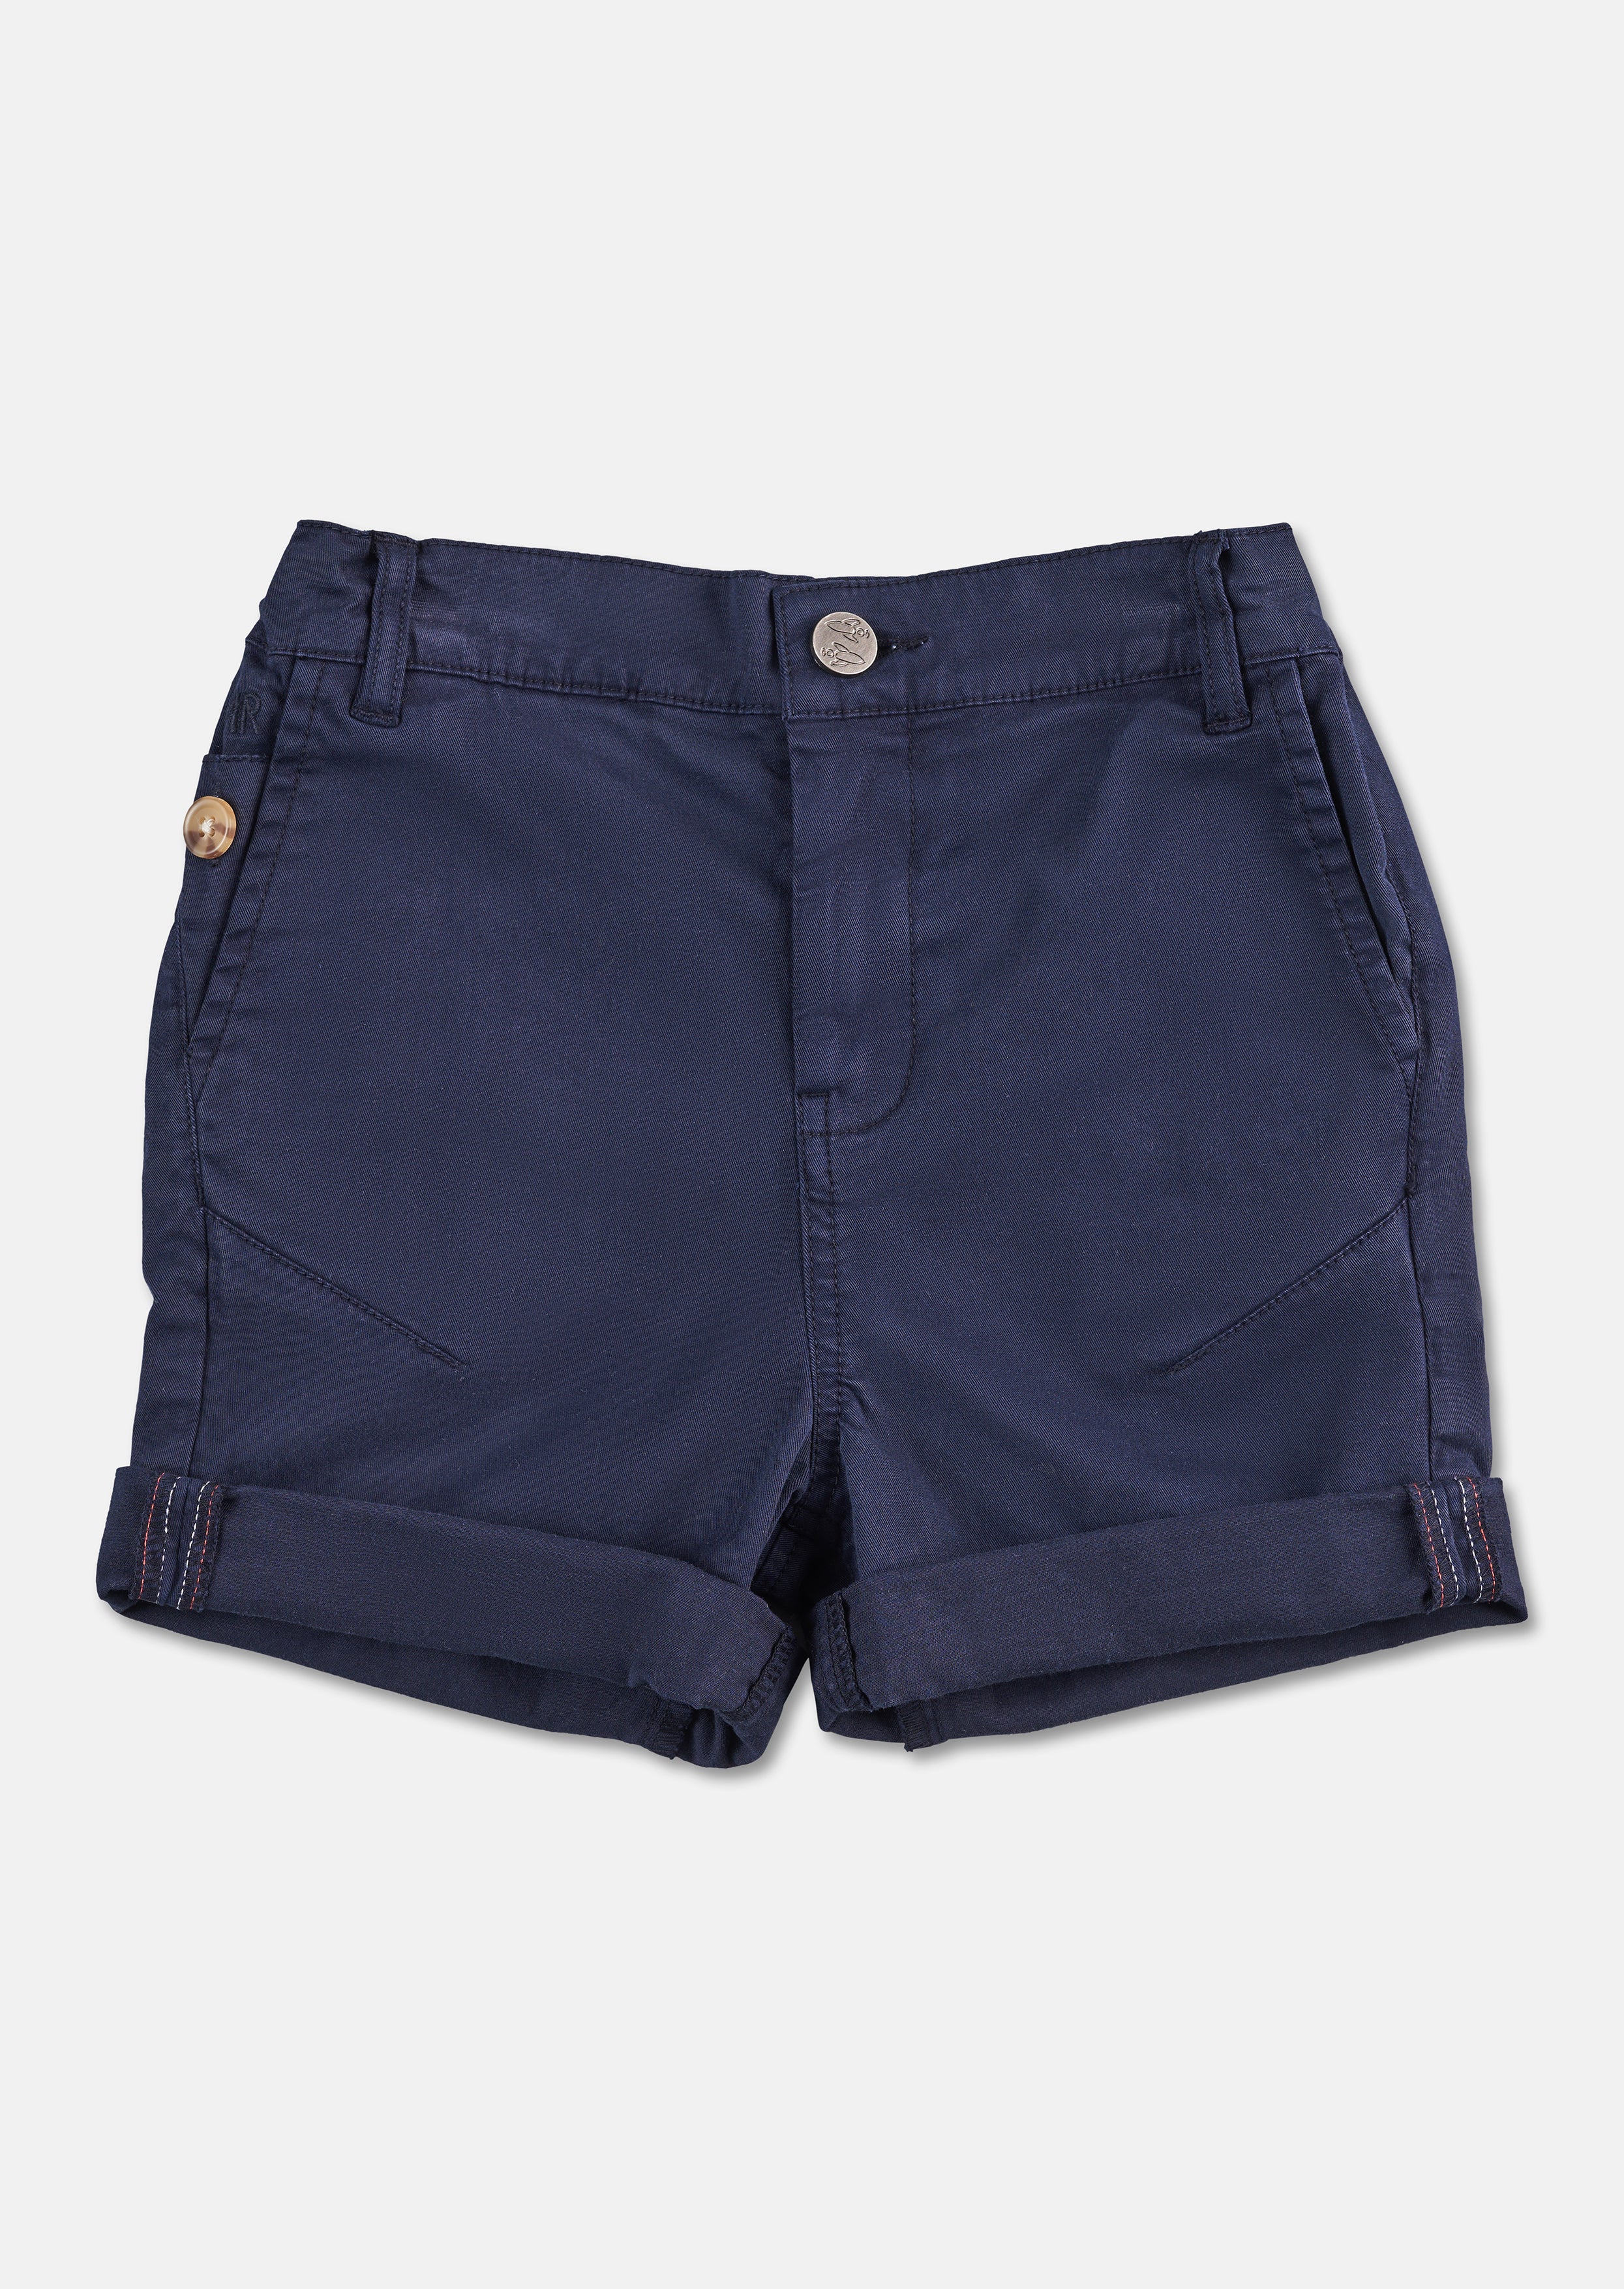 Pleated Women's Trouser Shorts - Tan | Levi's® US